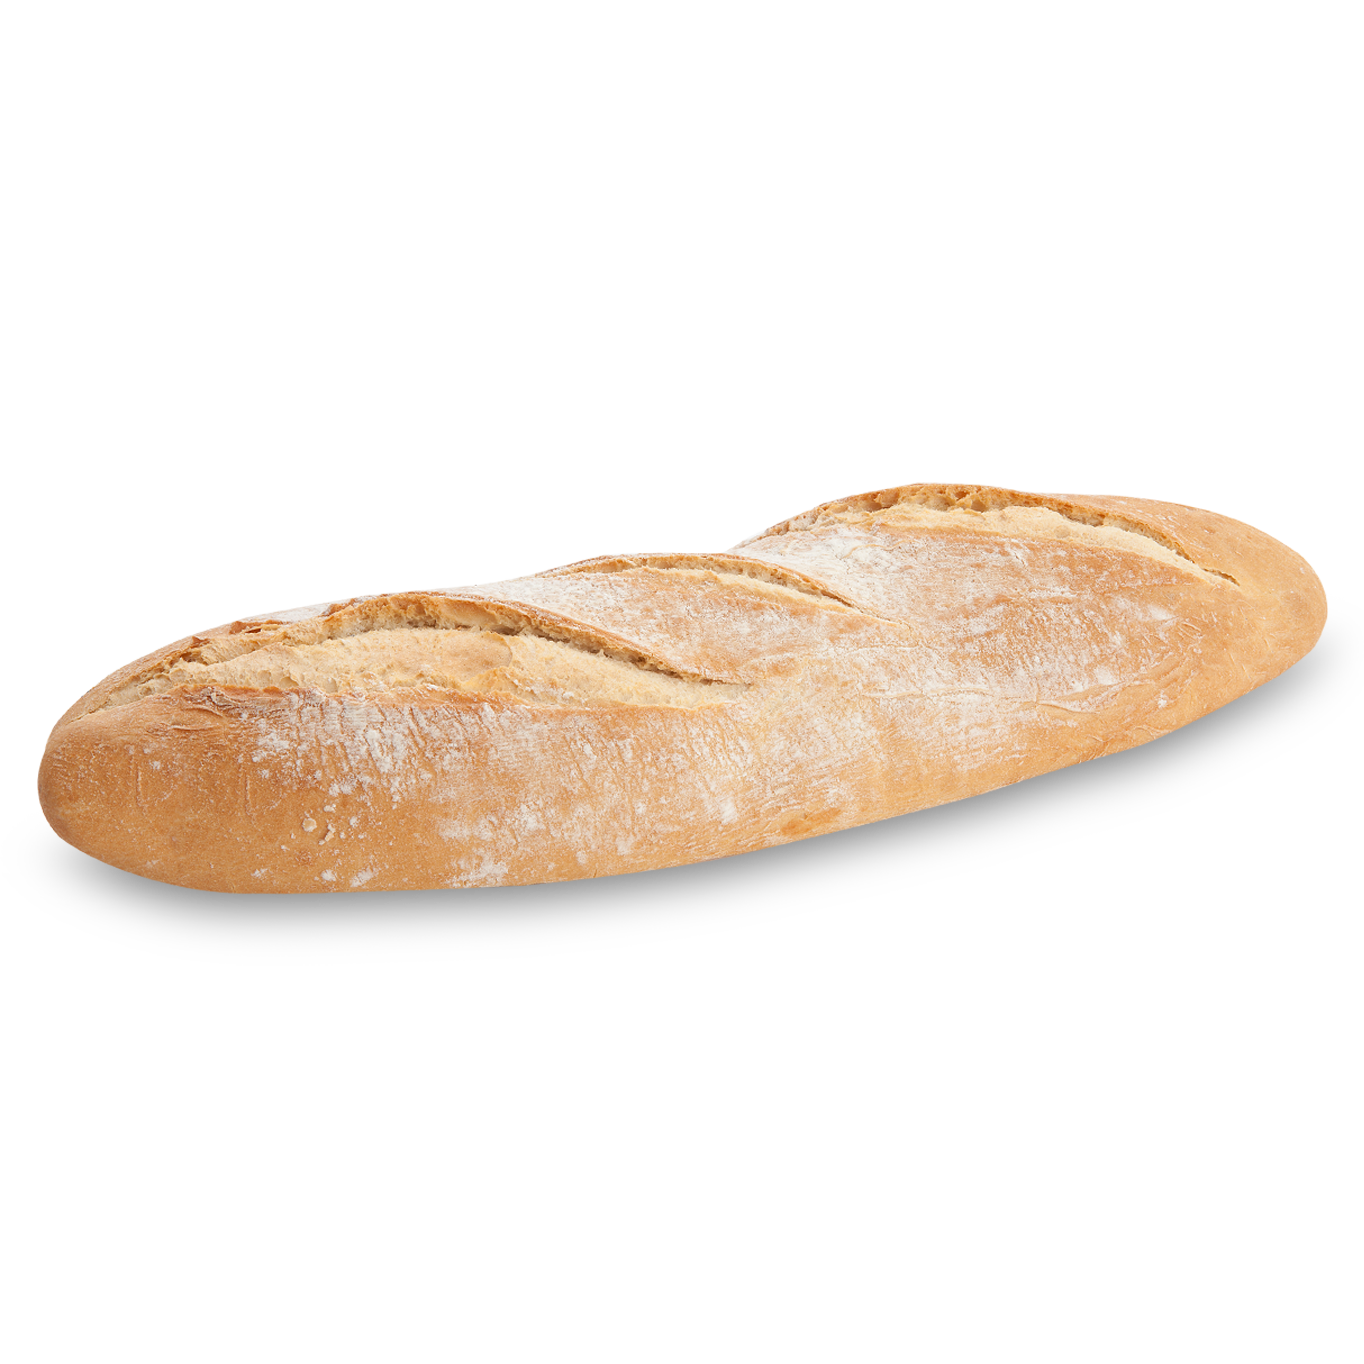 Italian Bread Transparent Background